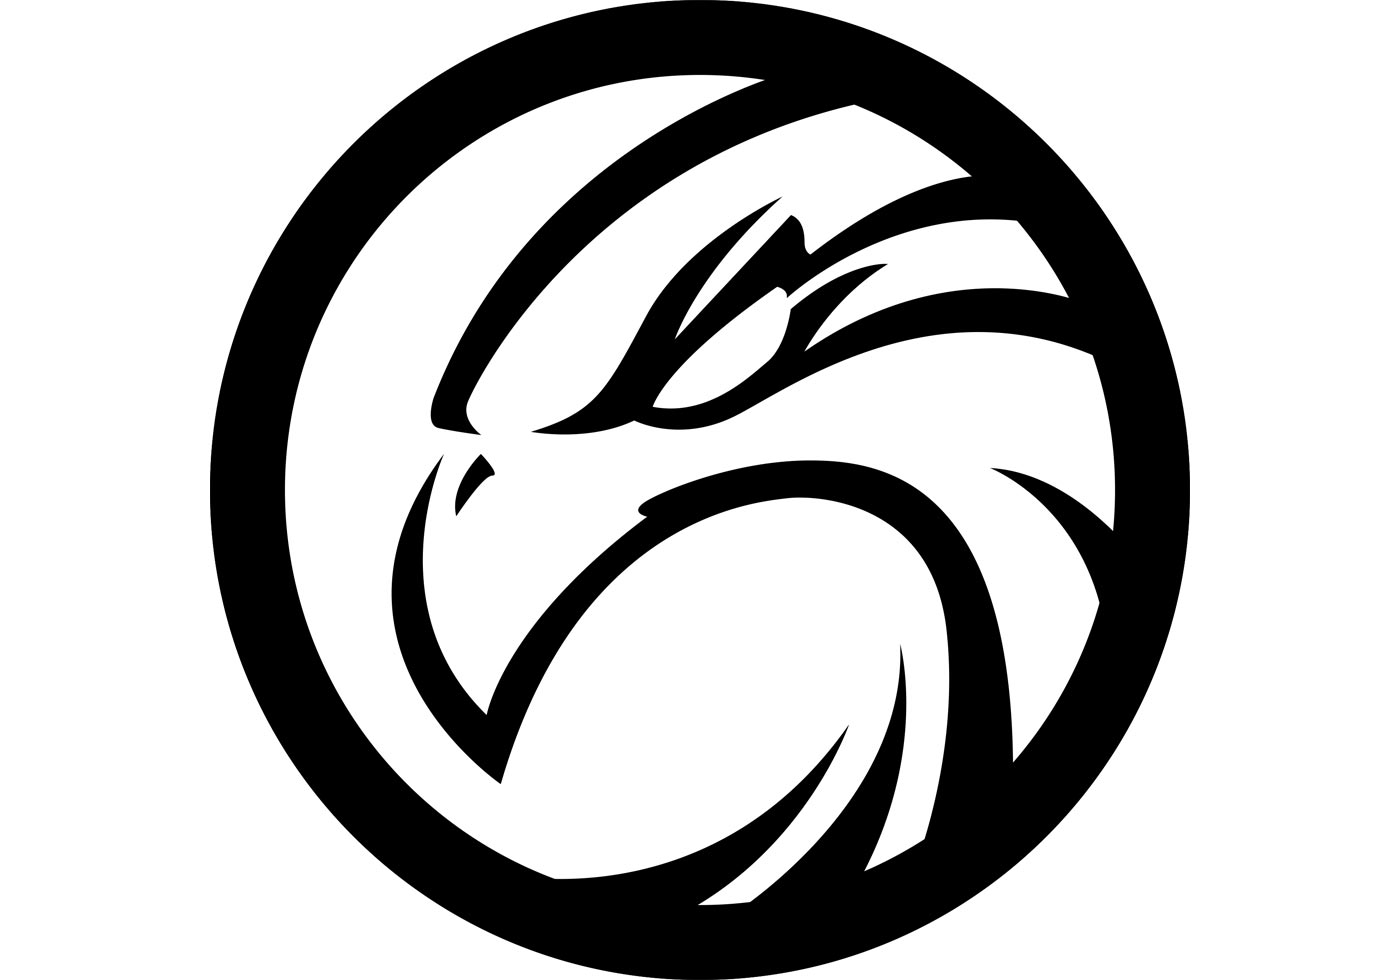 Hawk Logo Free Vector Art - (4249 Free Downloads)